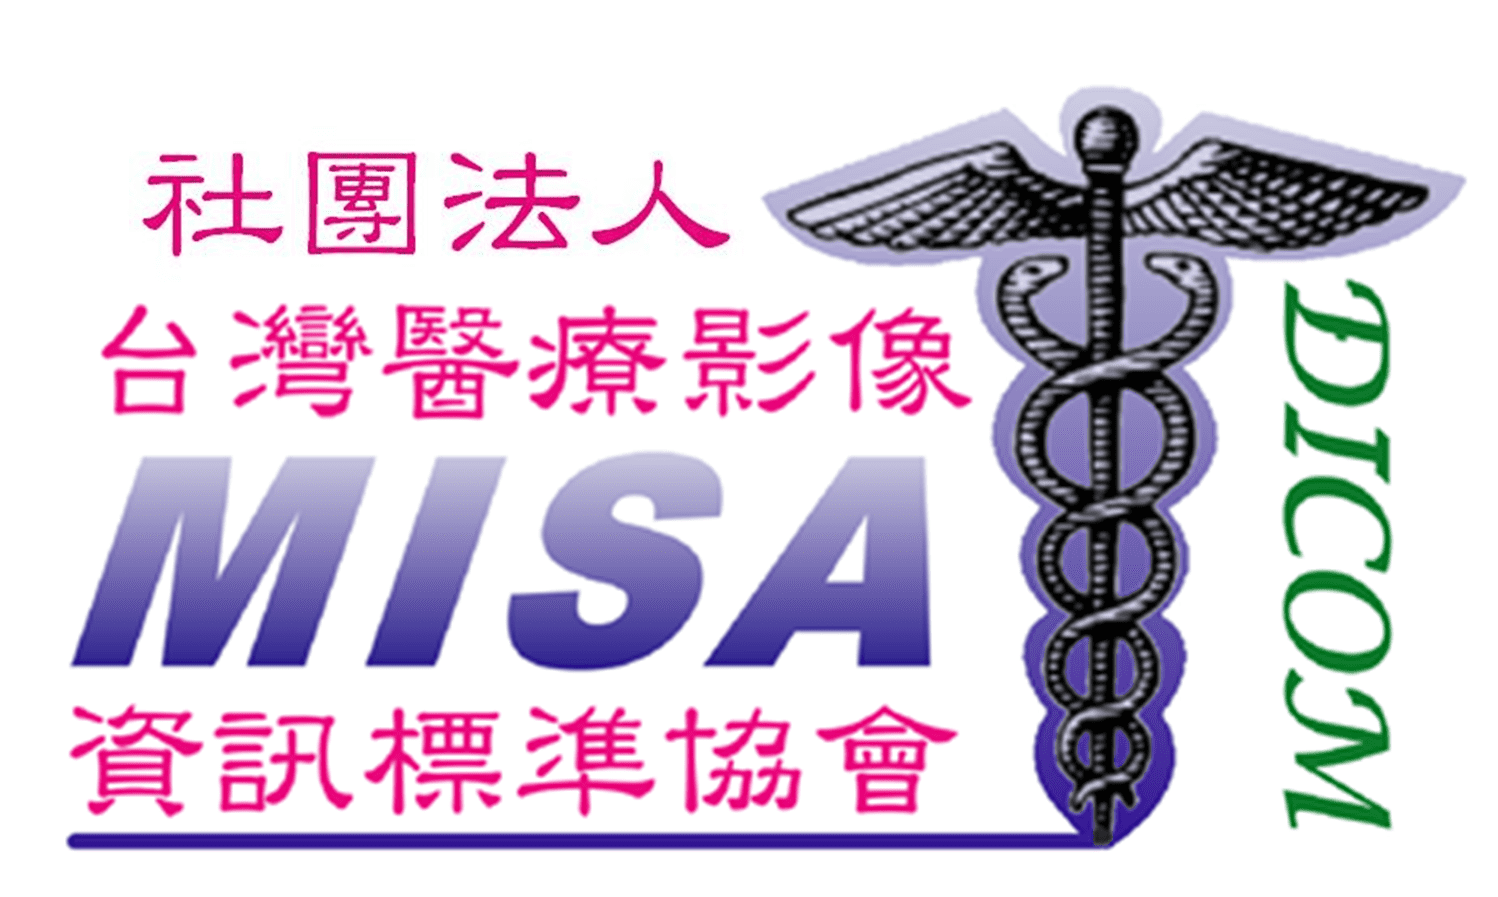 社團法人台灣醫療影像資訊標準協會（Medical Image Standards Association of Taiwan, MISAT）